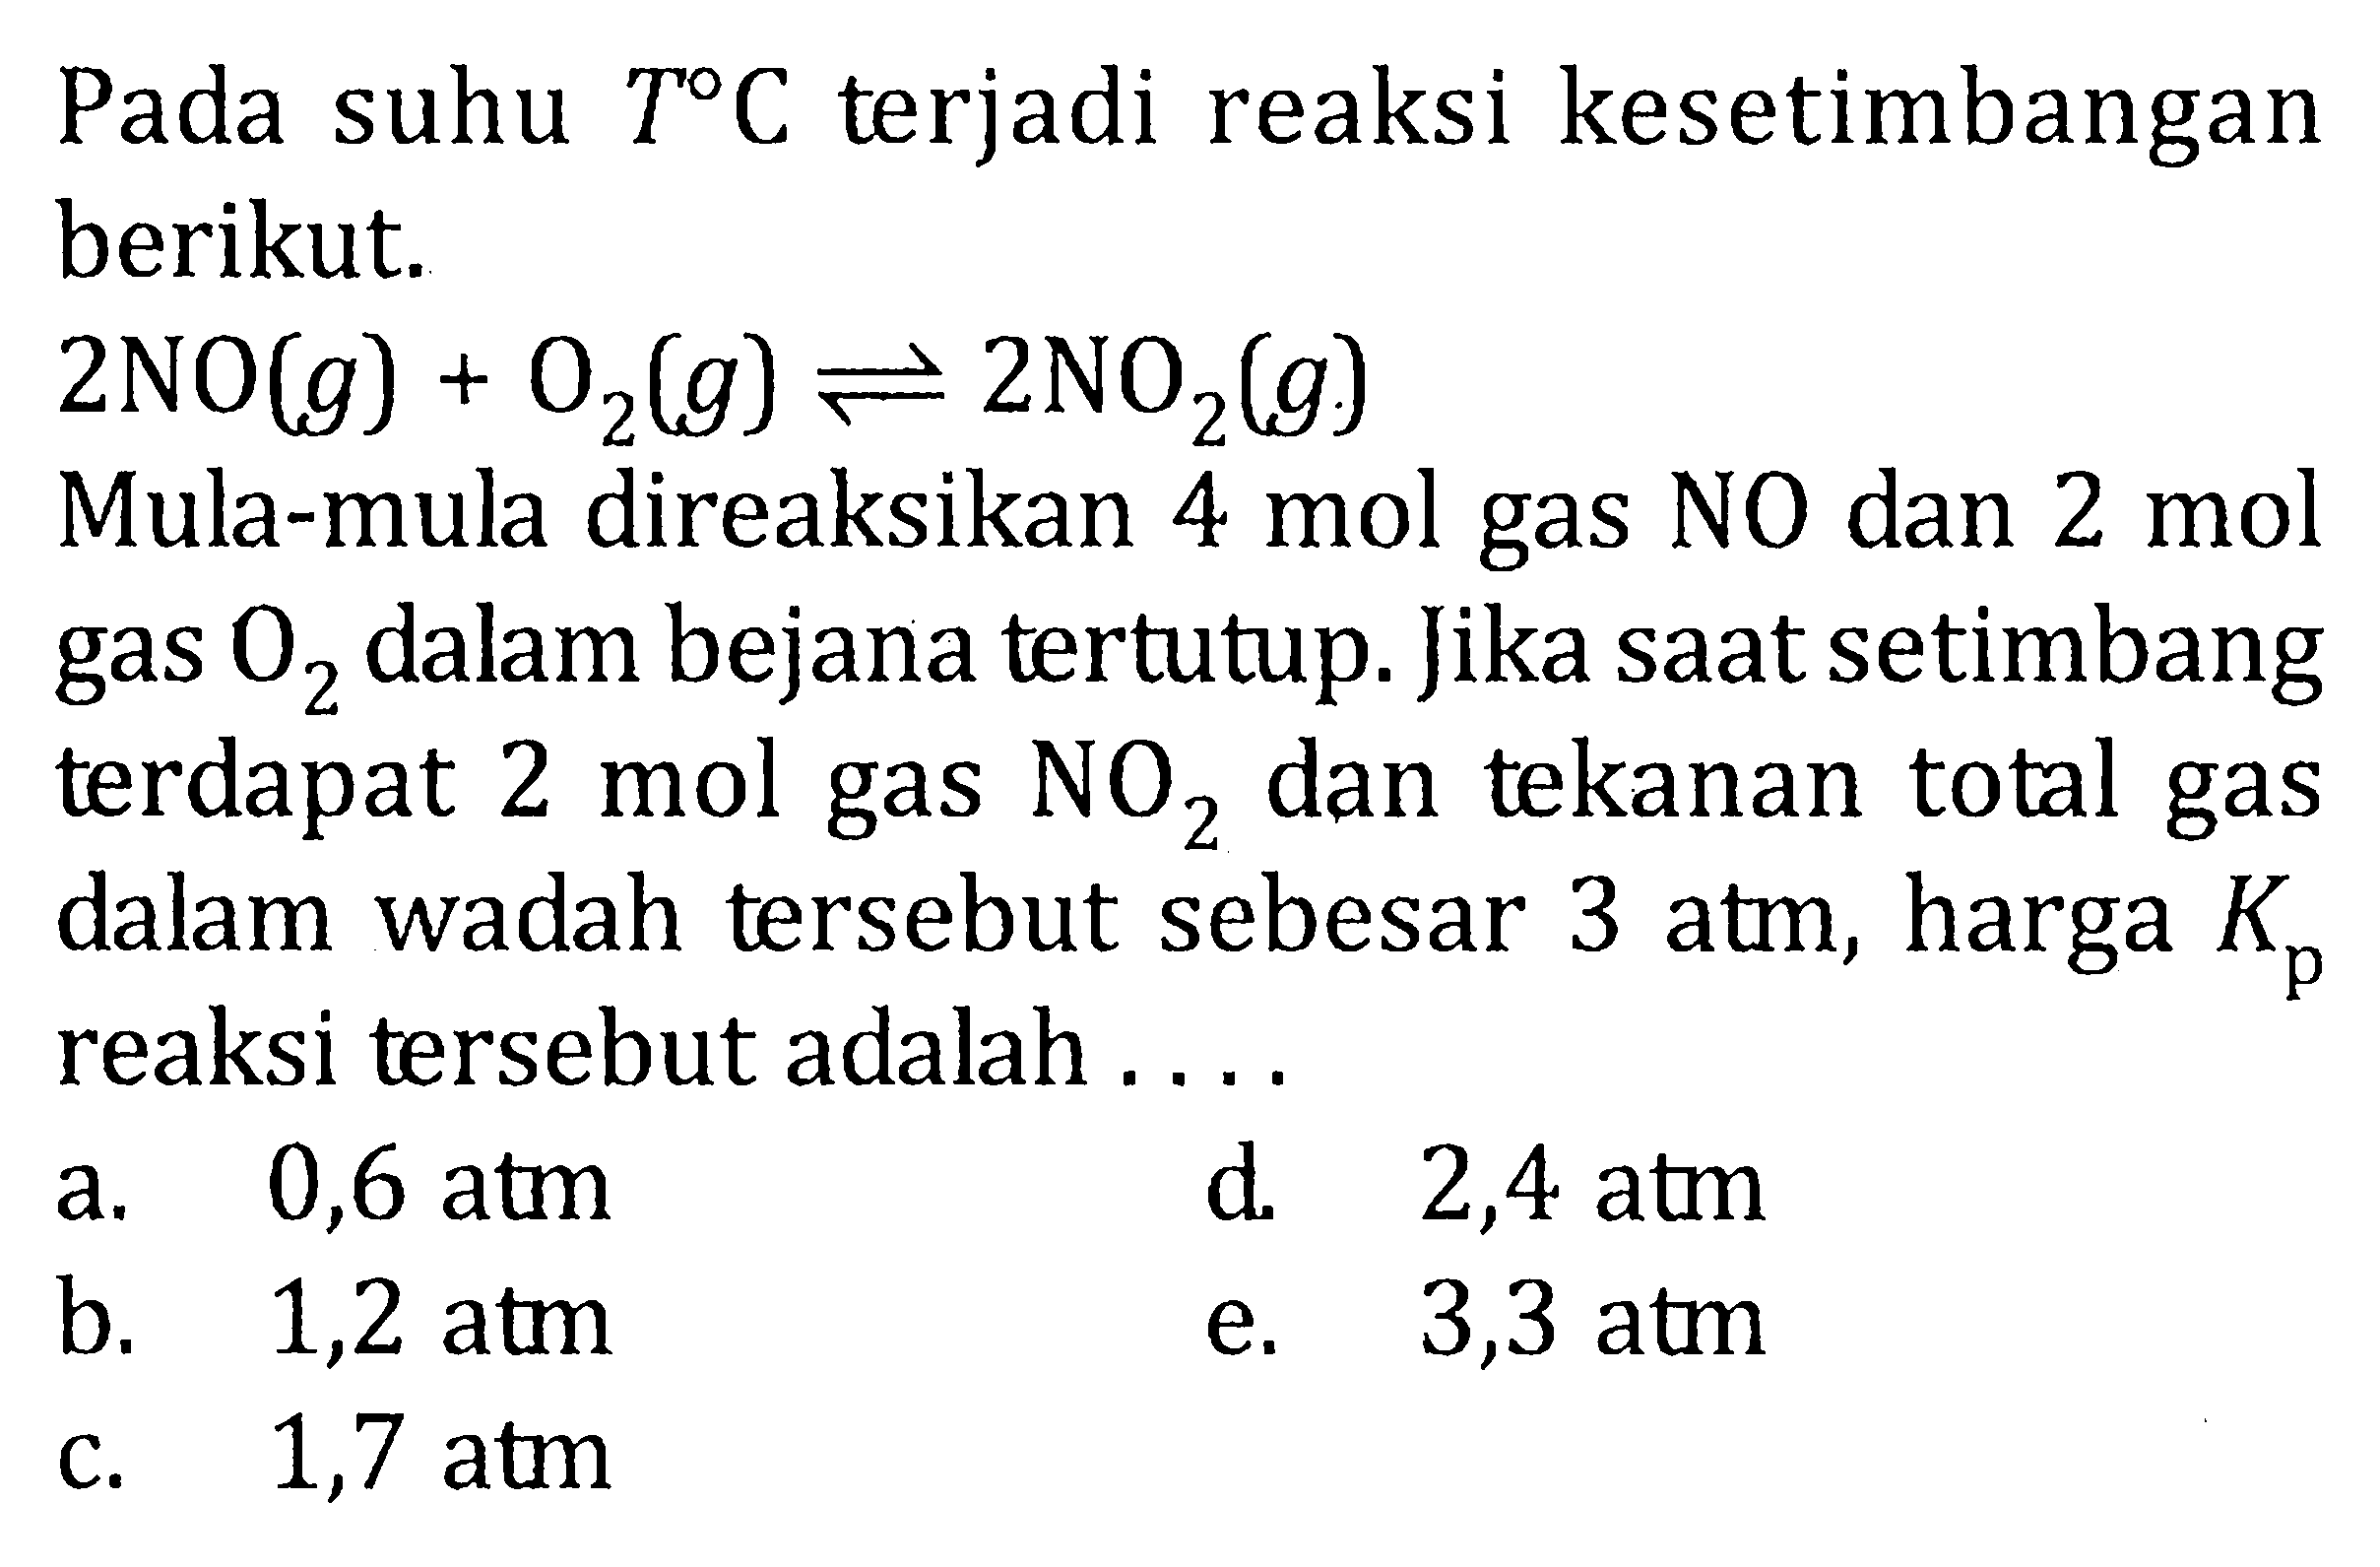 Pada suhu 7 C terjadi reaksi kesetimbangan berikut 2NO(g) + O2(g) <=> 2NO2(g) Mula-mula direaksikan mol gas NO dan 2 mol gas O2 dalam bejana tertutup. Jika saat setimbang terdapat 2 mol gas dan tekanan total gas dalam wadah tersebut sebesar 3 atm, harga Kp reaksi tersebut adalah ...